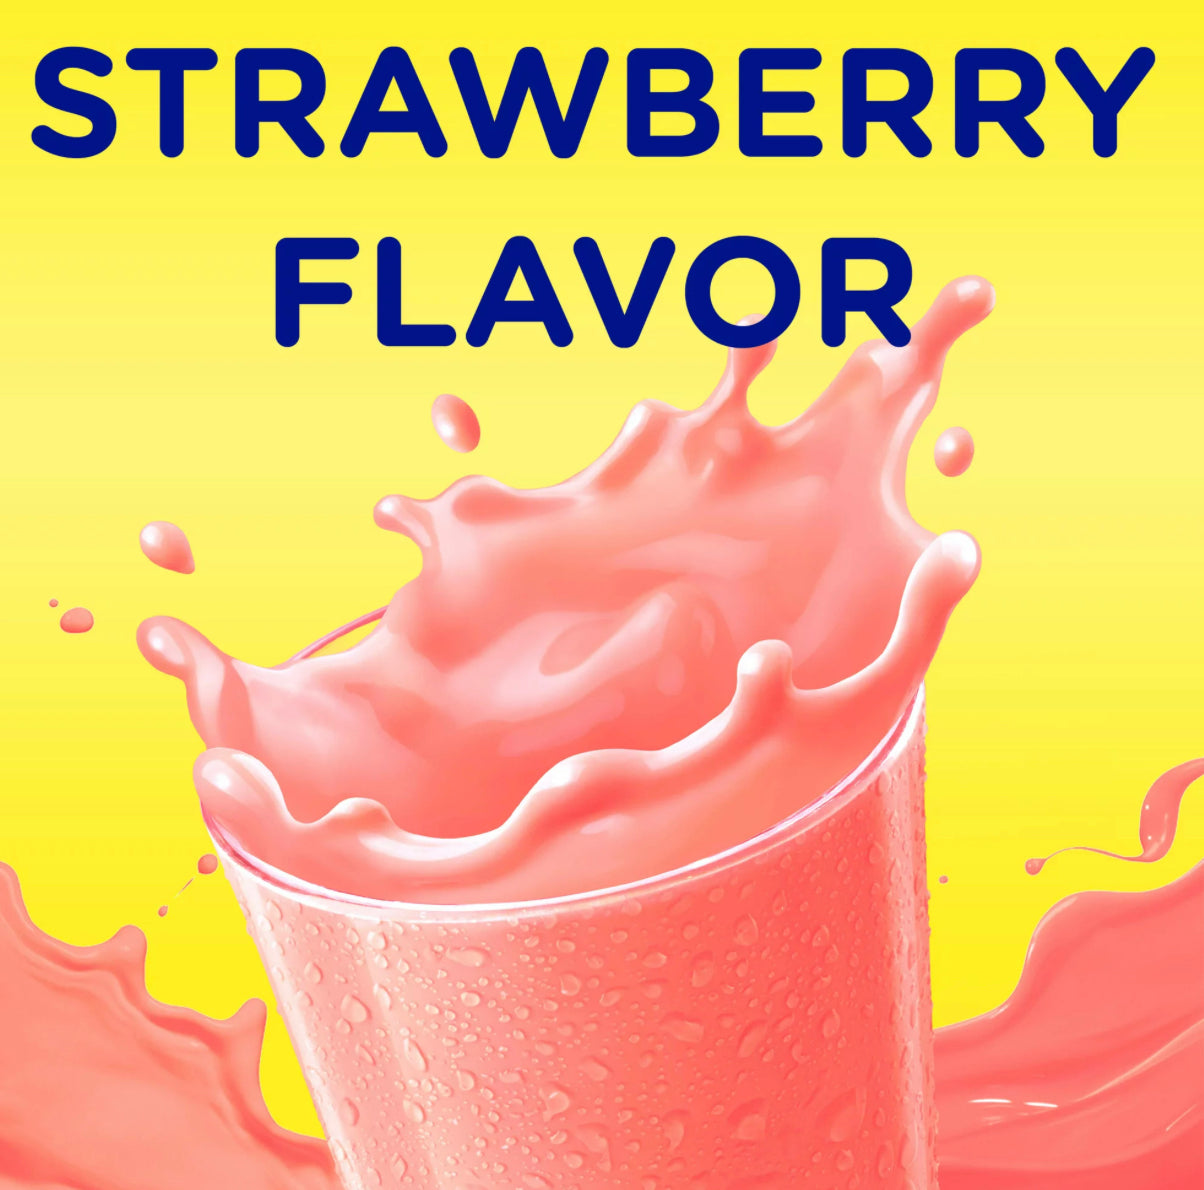 Nesquik Strawberry Flavor Powder Drink Mix 9.38 oz